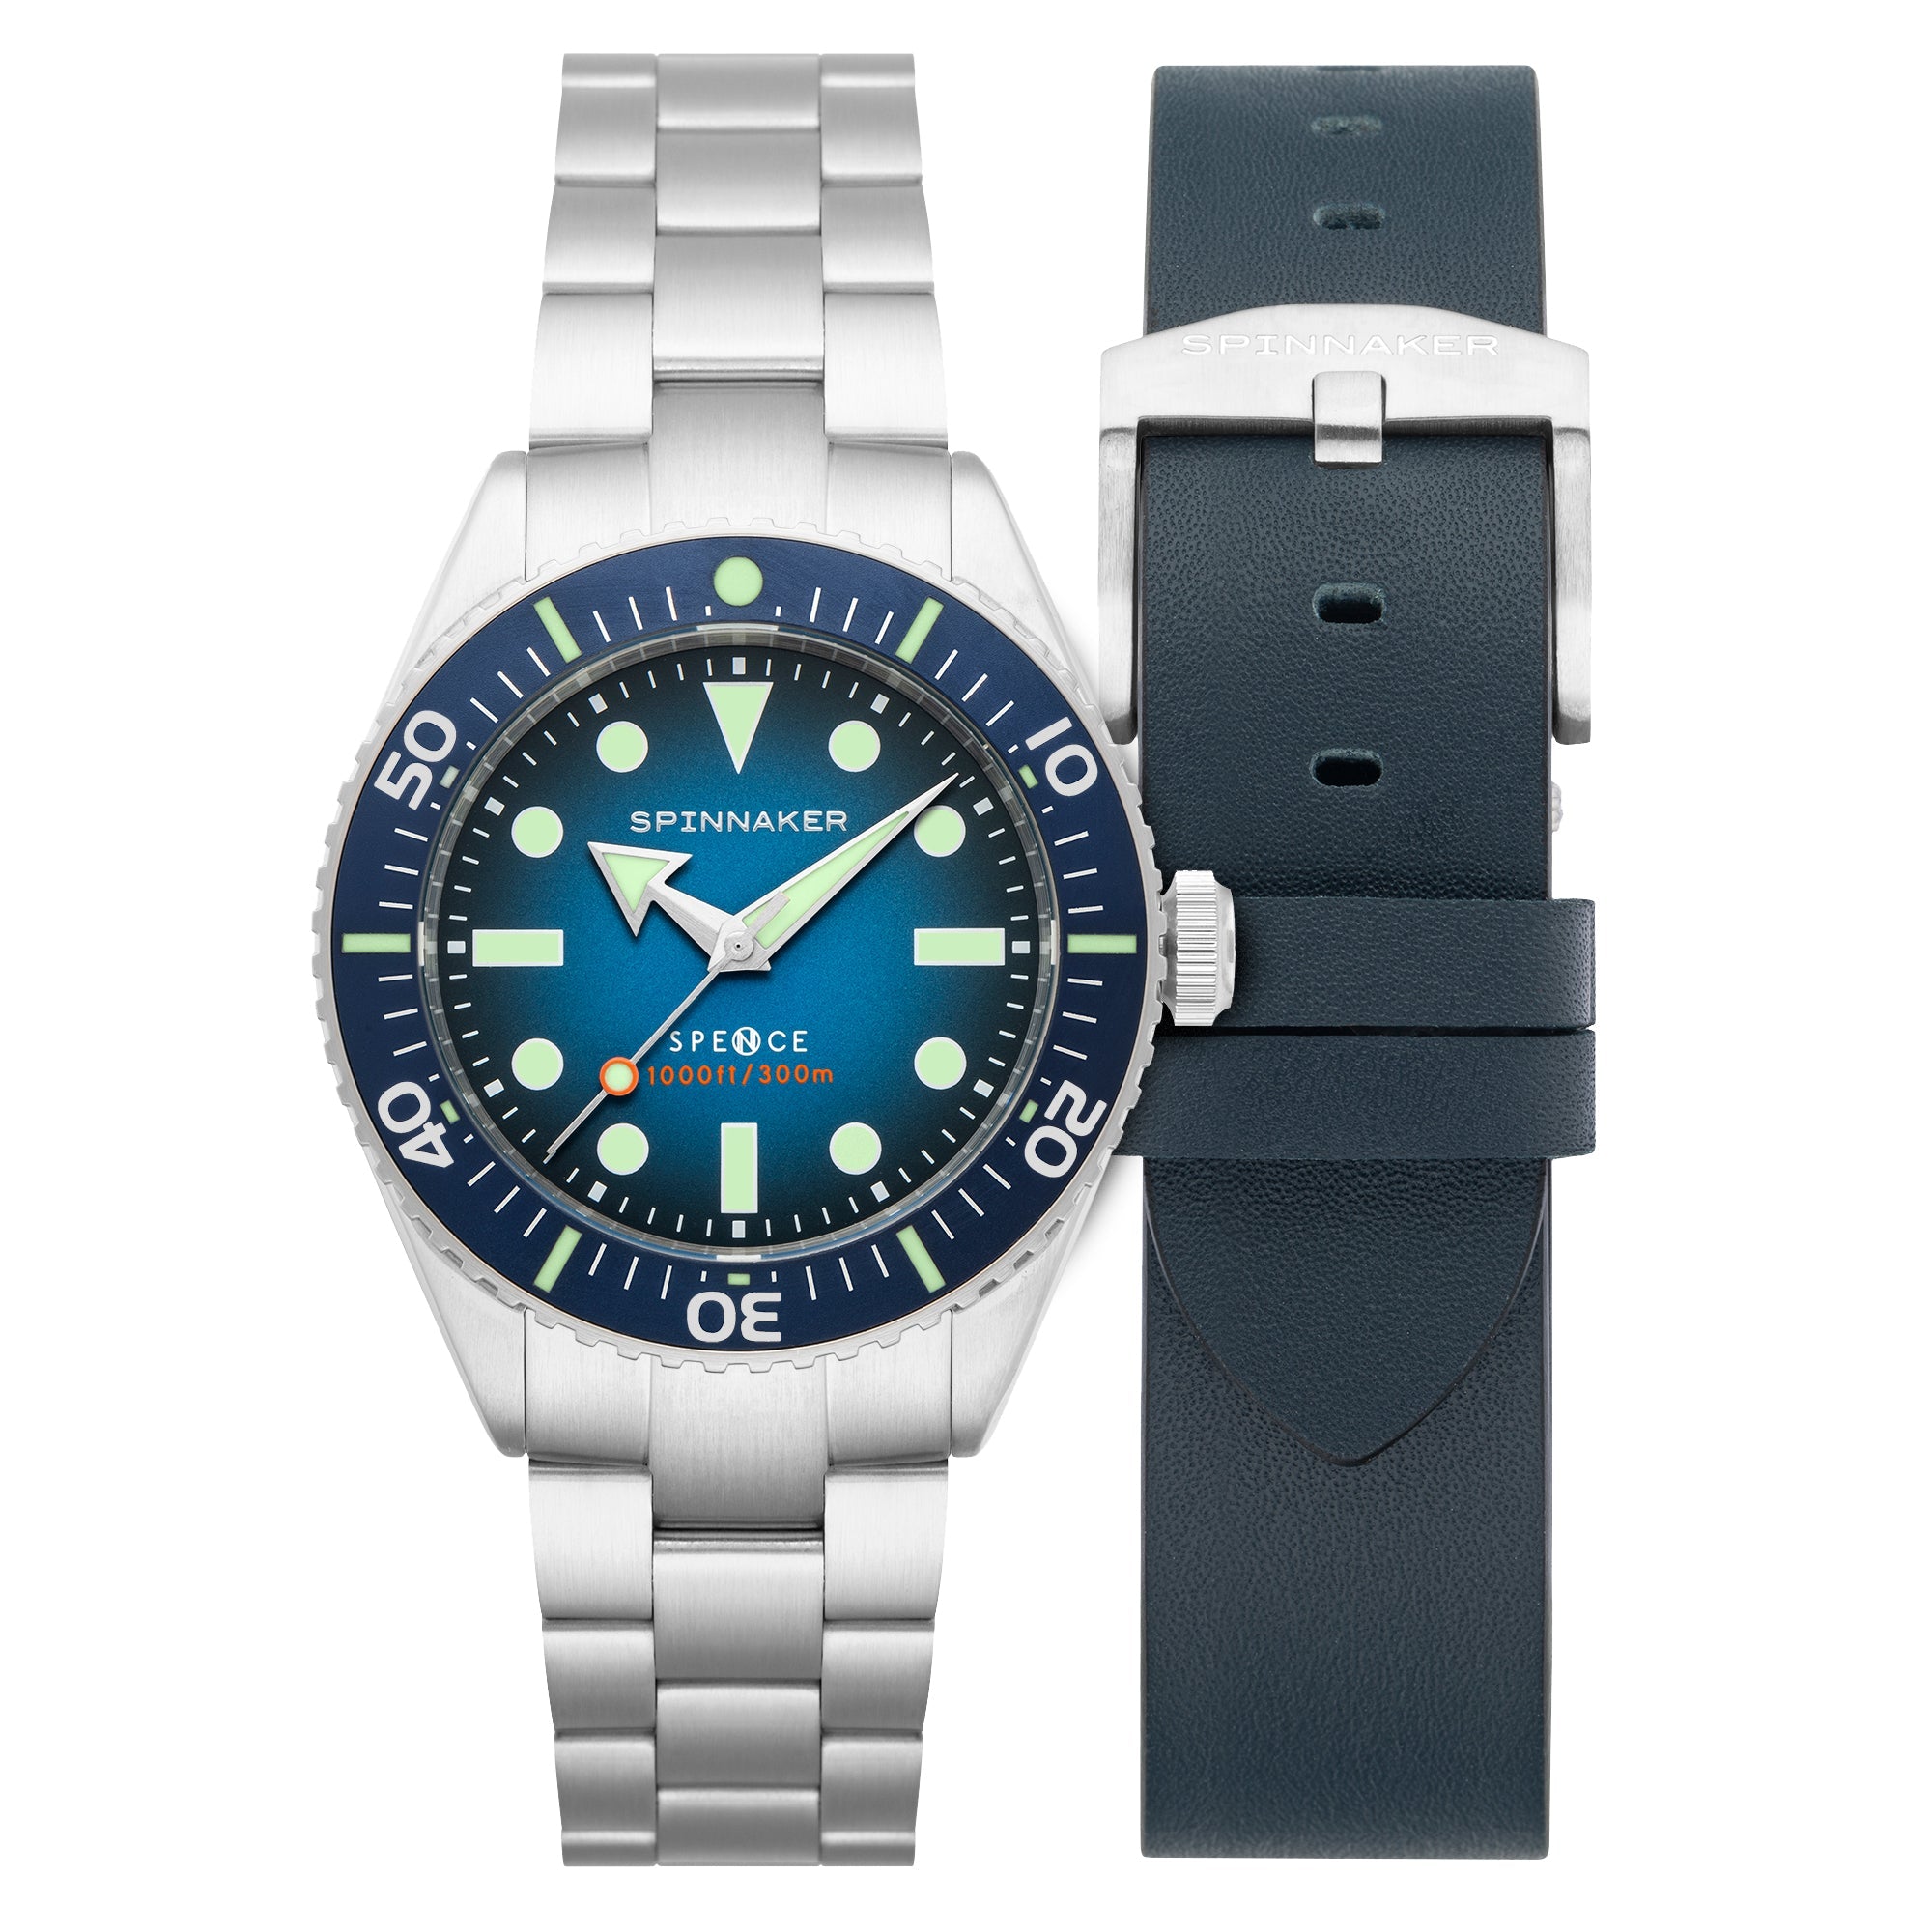 SPINNAKER Spinnaker Spence Men's Japanese Automatic Indigo Blue Watch SP-5097-22